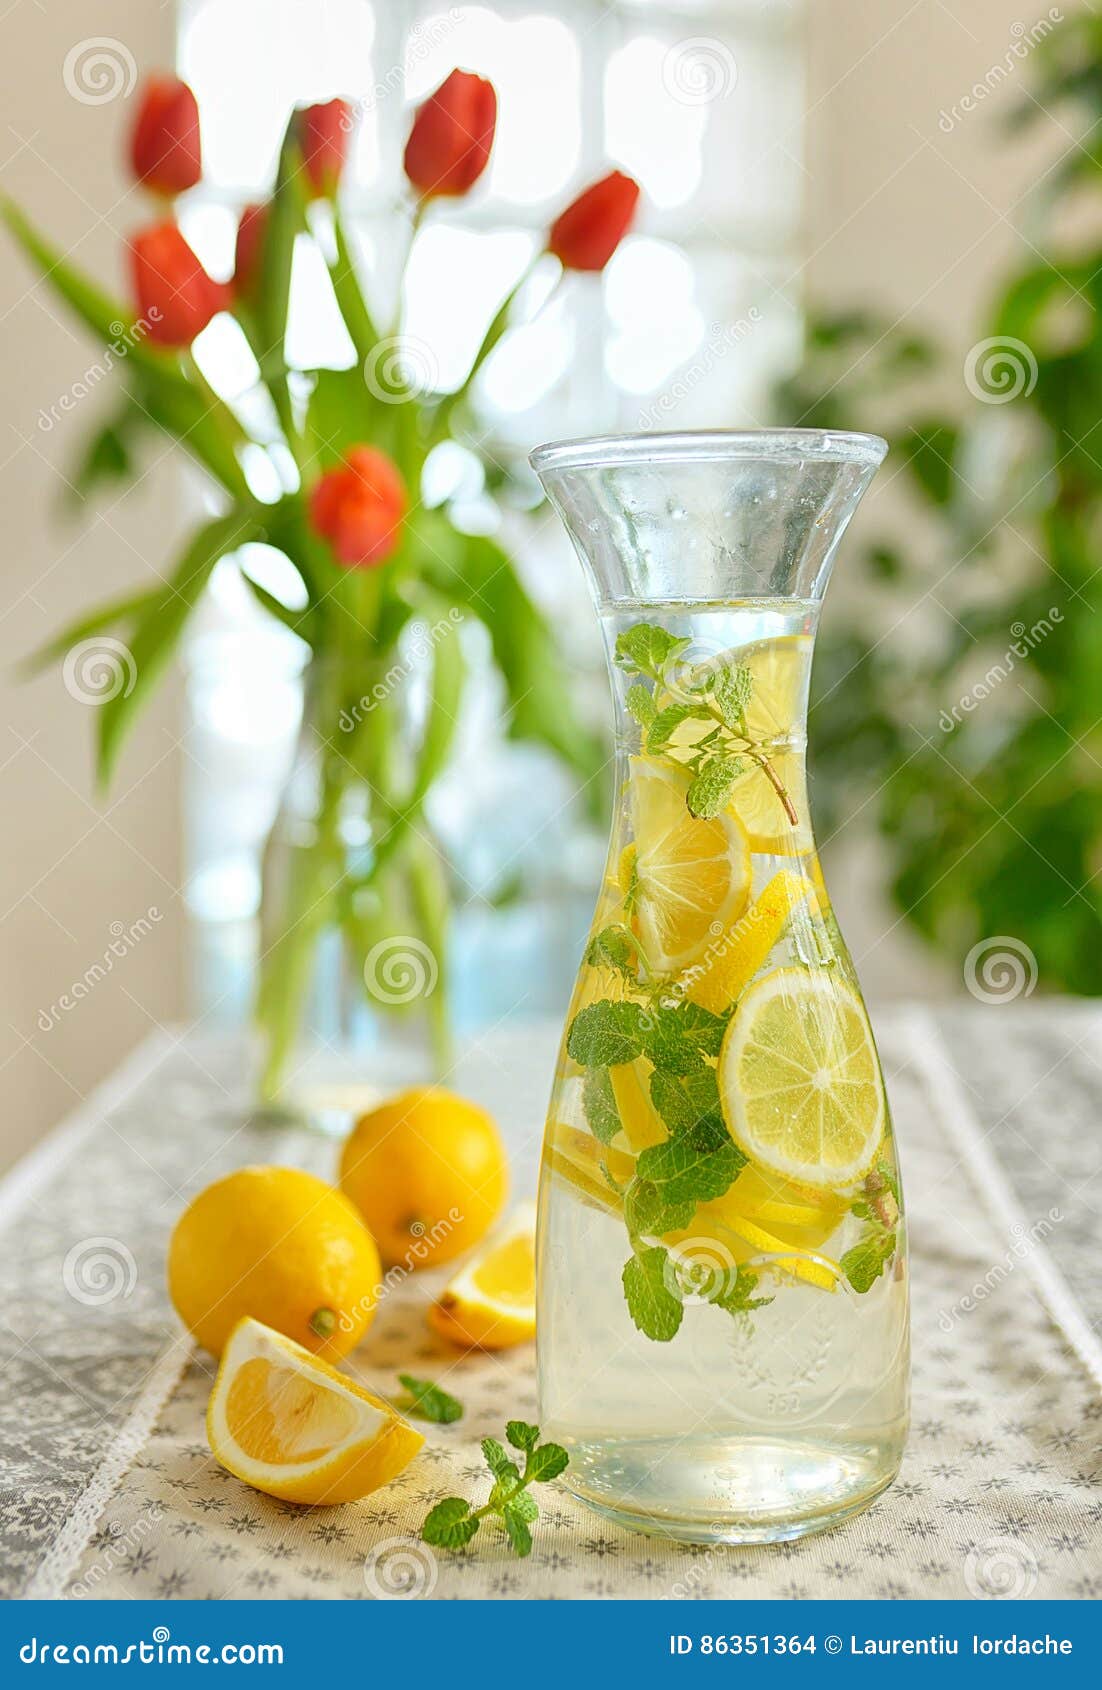 fresh limes and lemonade